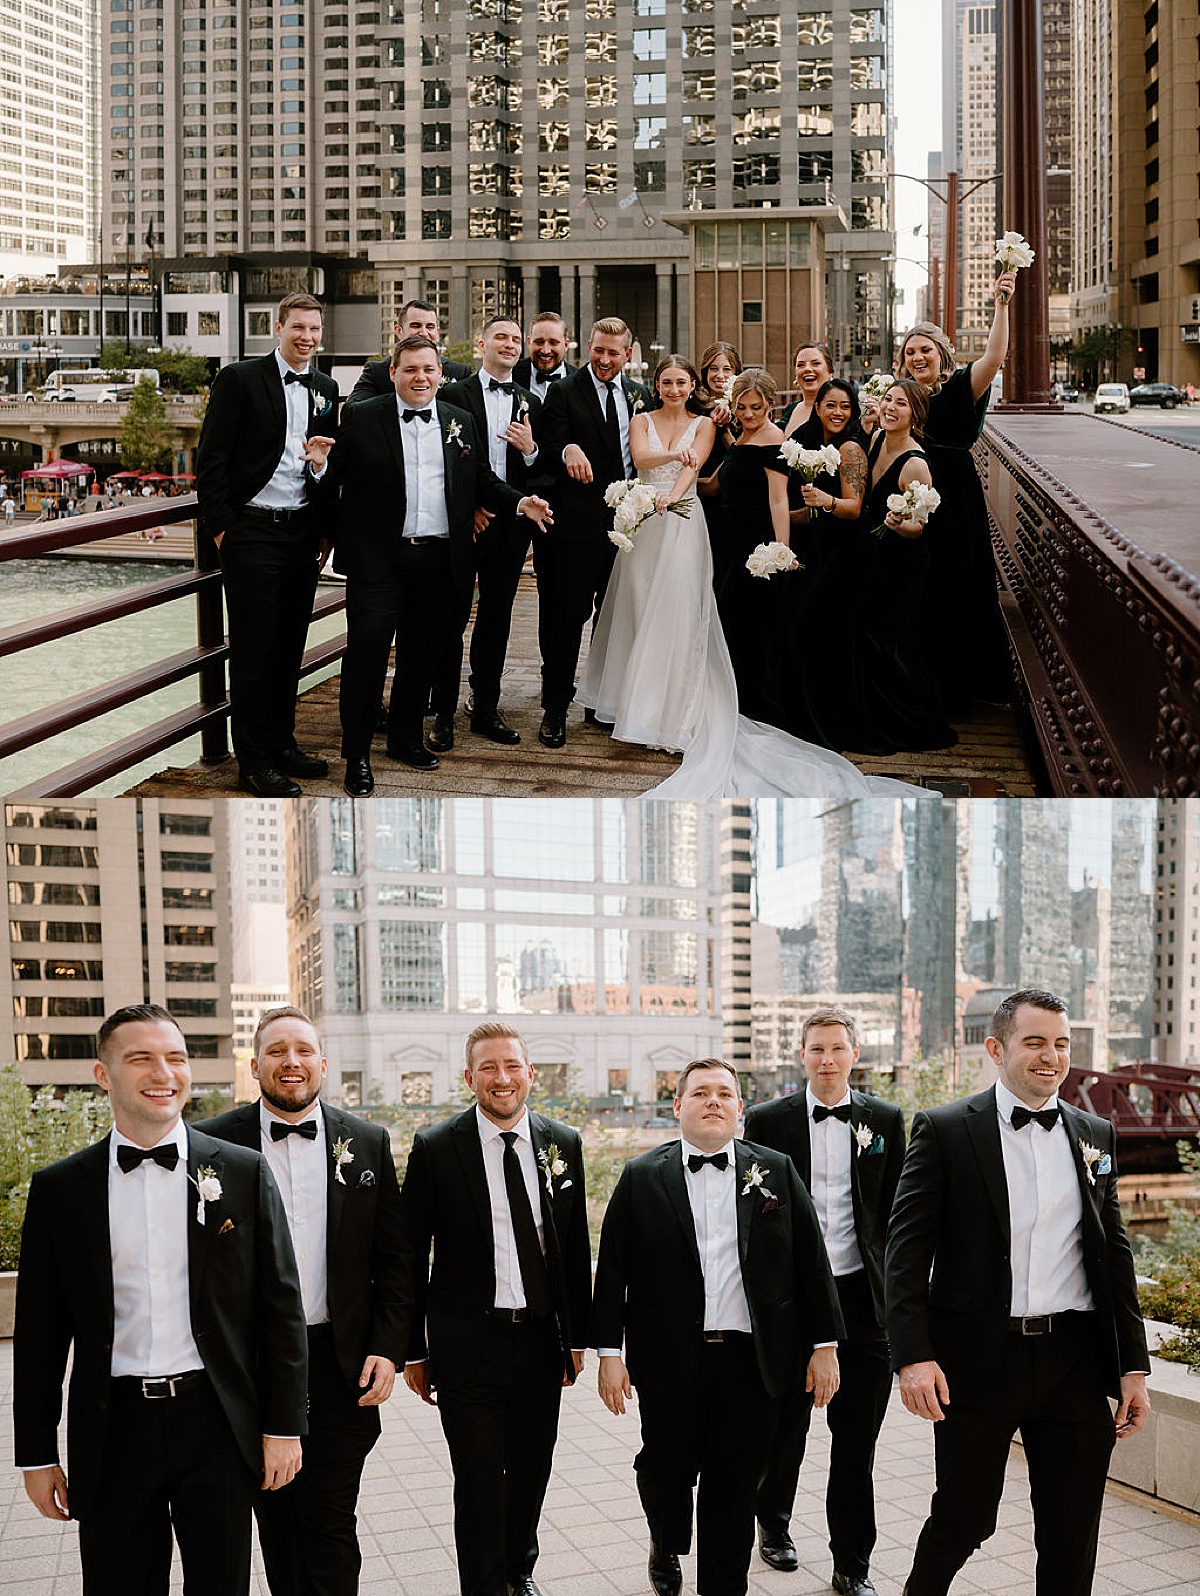 Wedding party poses on bridge over chicago river during elegant editorial wedding at bridgeport art center